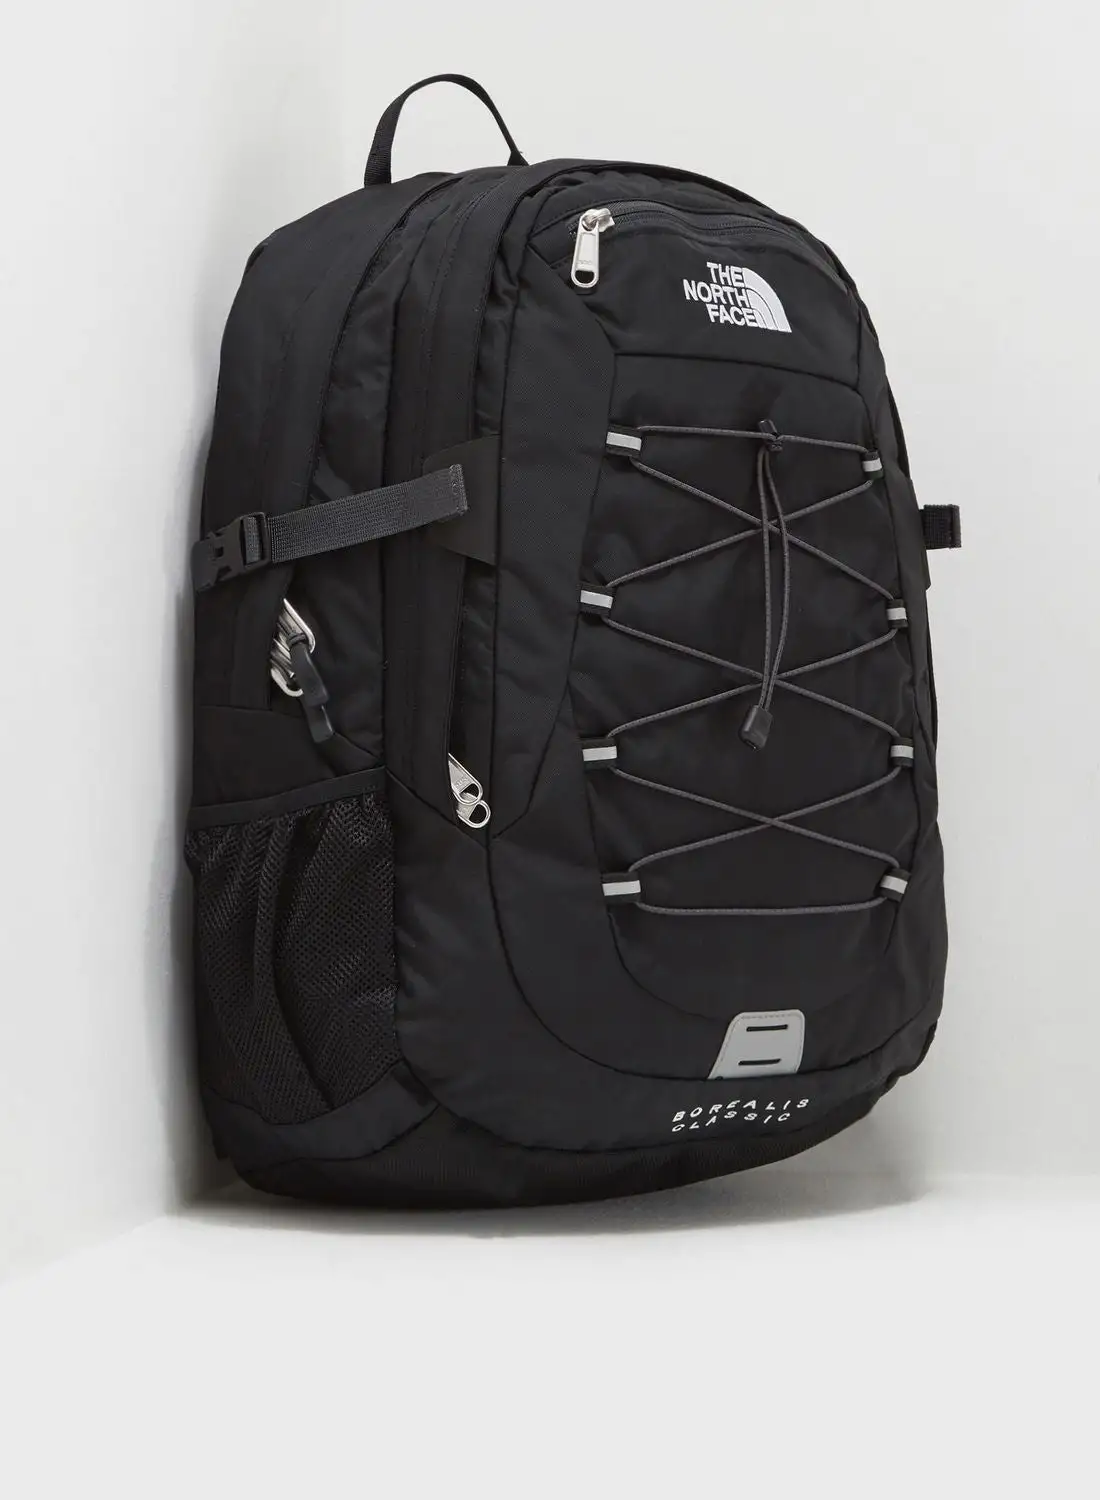 northface Borealis Classic Backpack